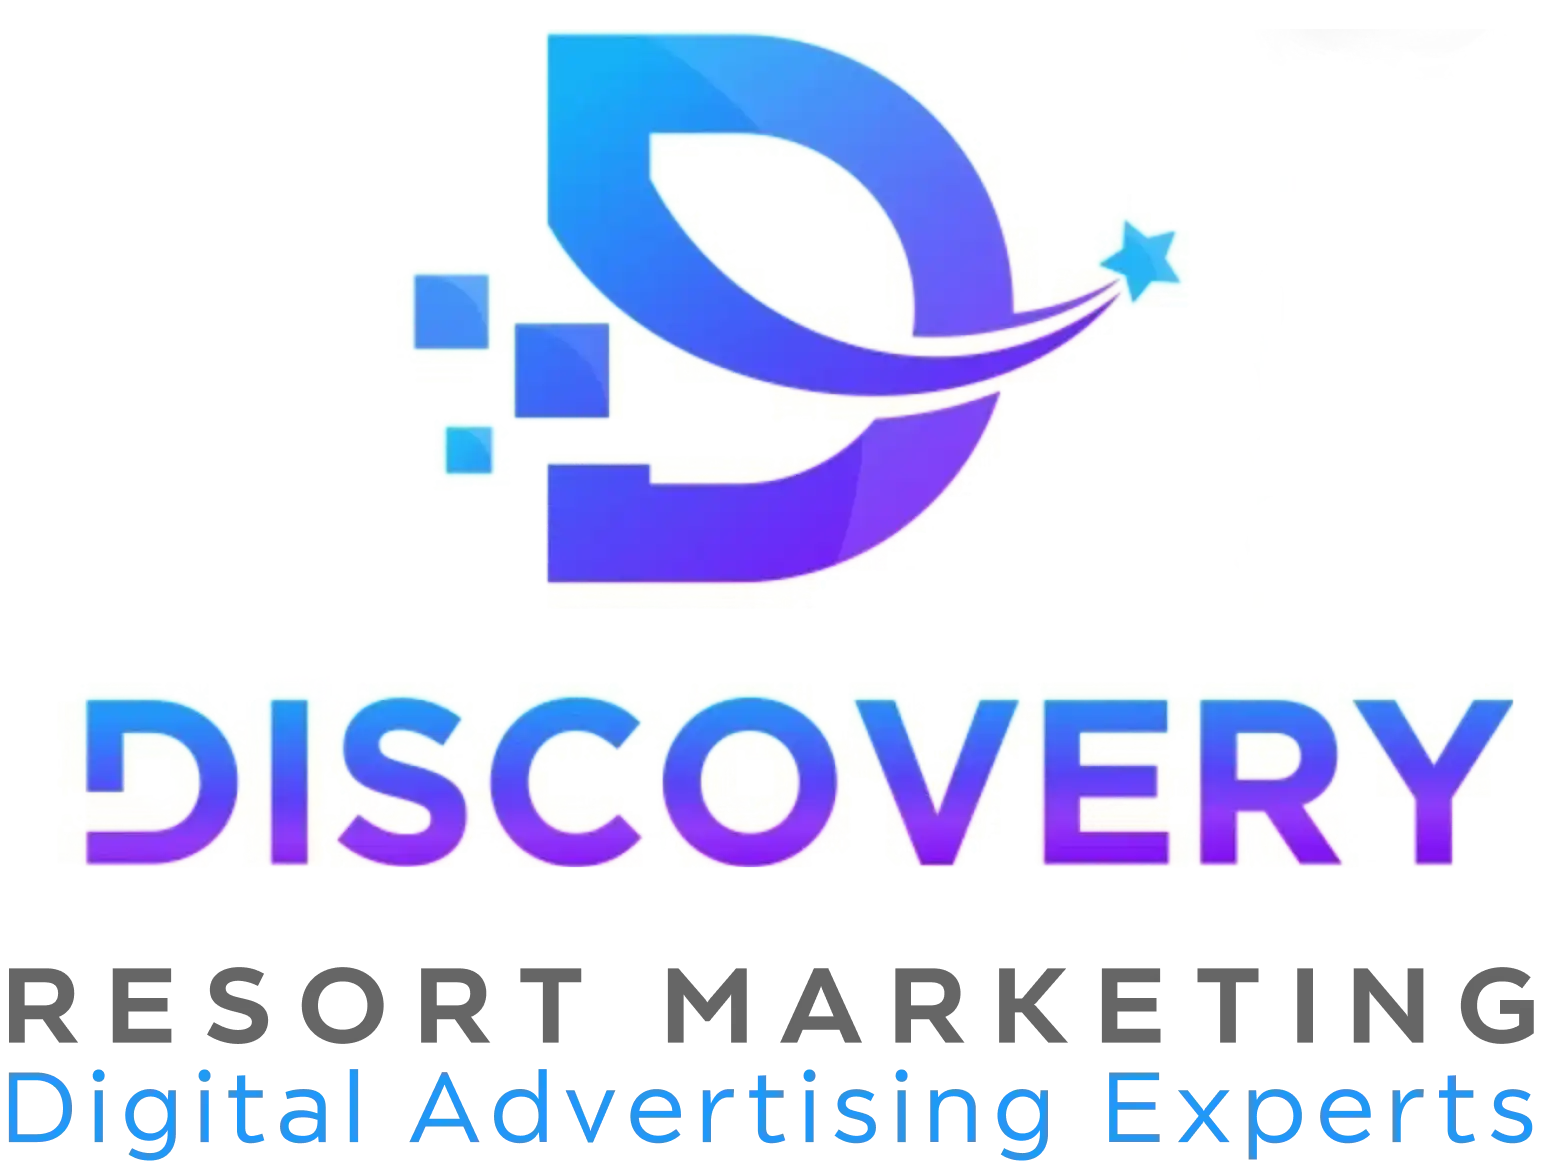 Discovery Resort Marketing